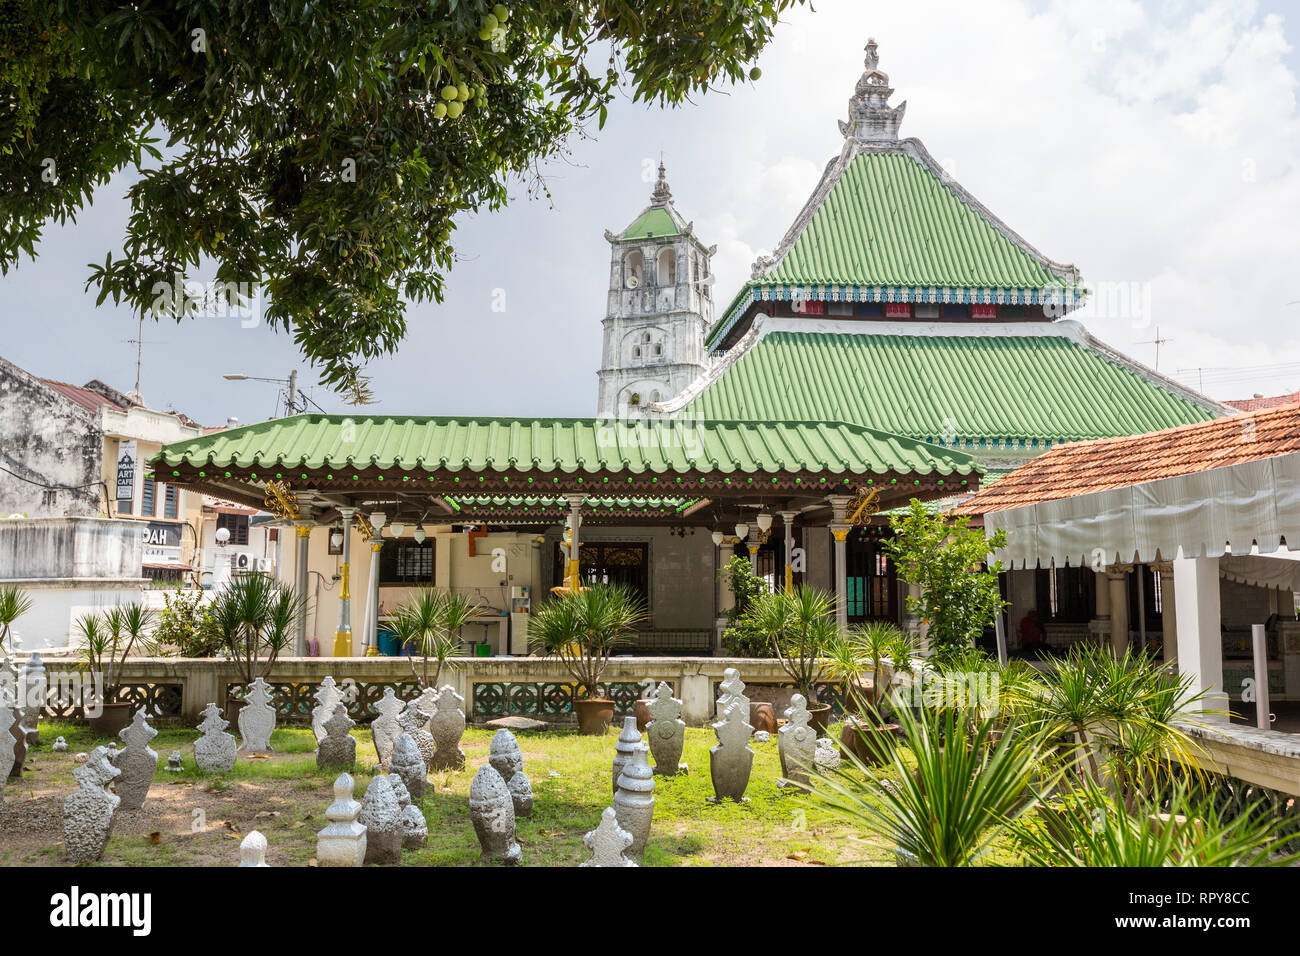 Kampung Kling Mosque, Masjid Kampung Kling, Cemetery Gravestones in Foreground.  Melaka, Malaysia. Stock Photo